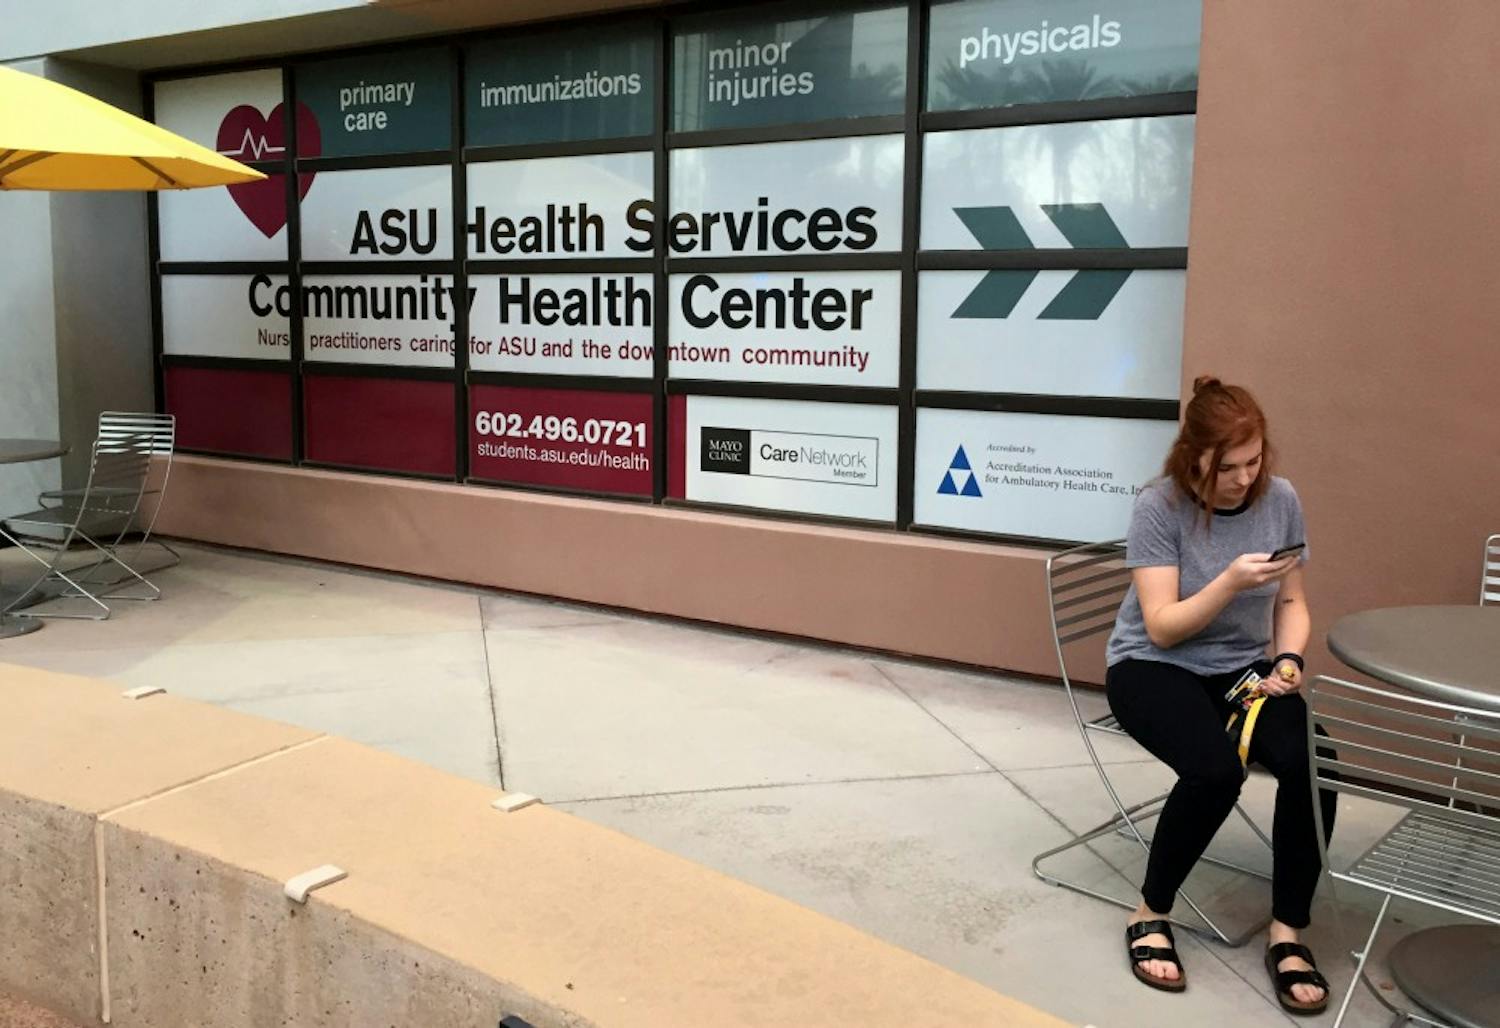 ASU Health Services Community Health Center at the Downtown Phoenix, Arizona campus, on Sunday, Oct. 2, 2016.